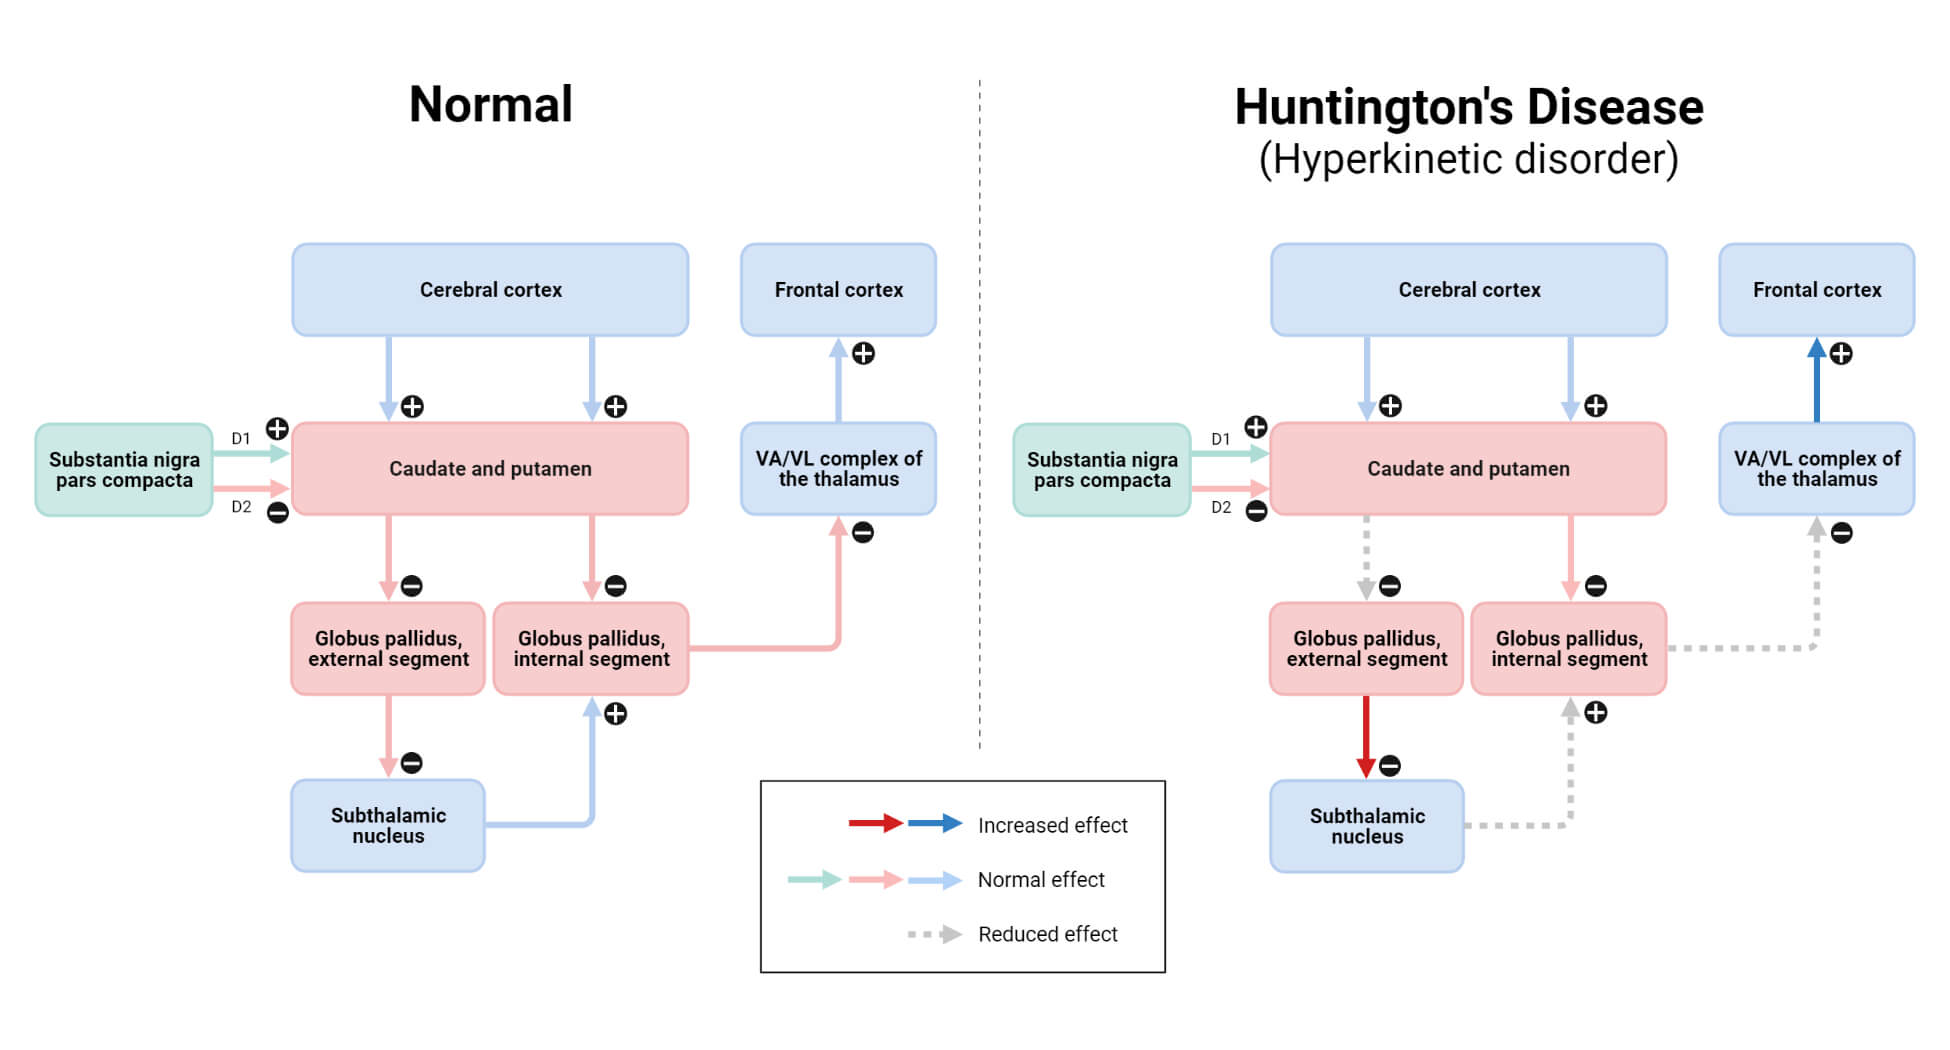 Huntington's Disease (Hyperkinetic Disorder)